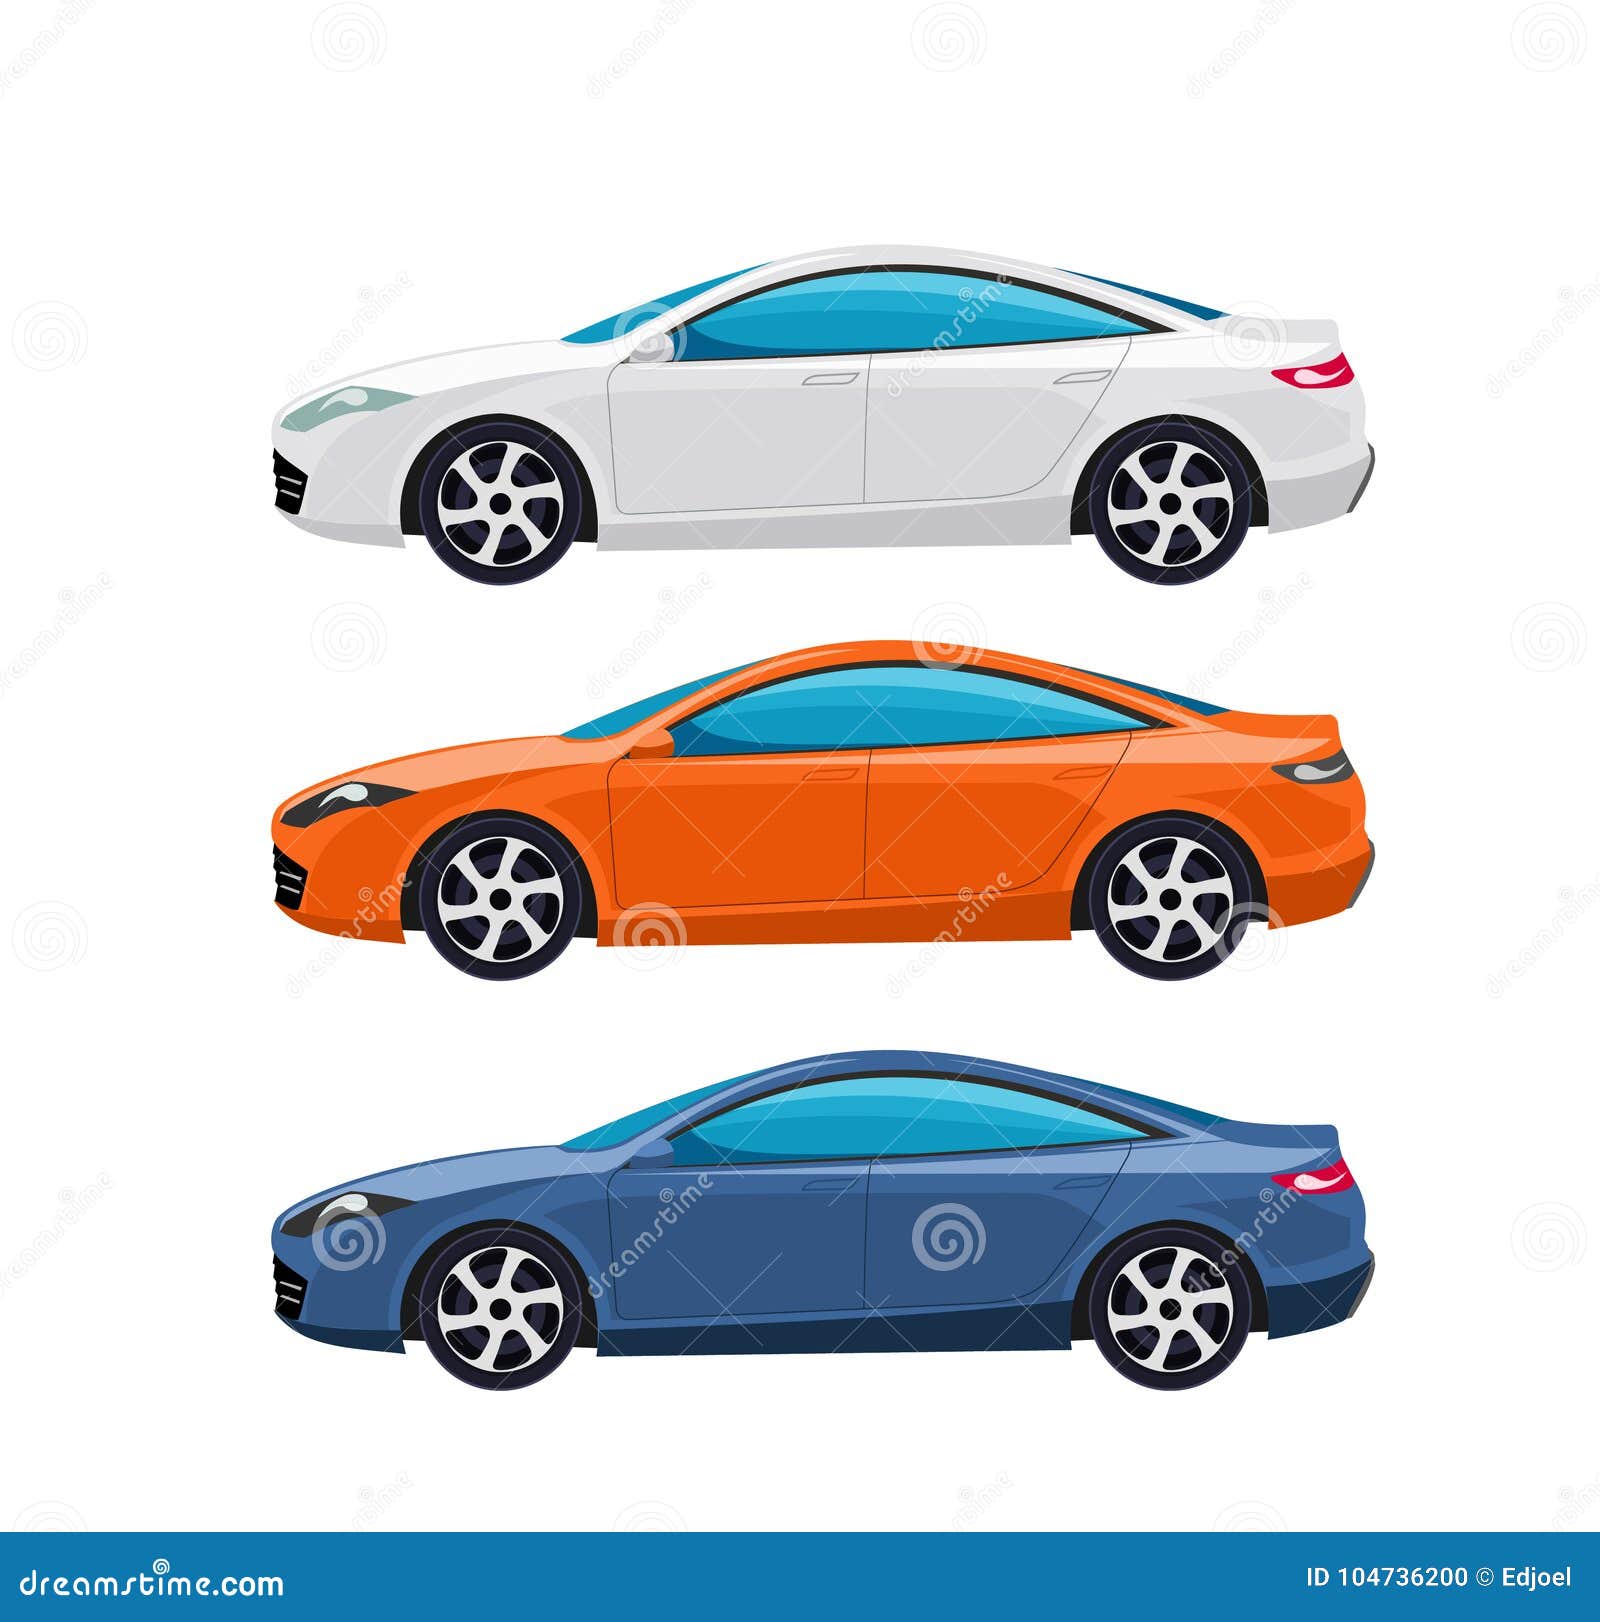 model rwhite, orange and blue of profile cars. super modern cars sports